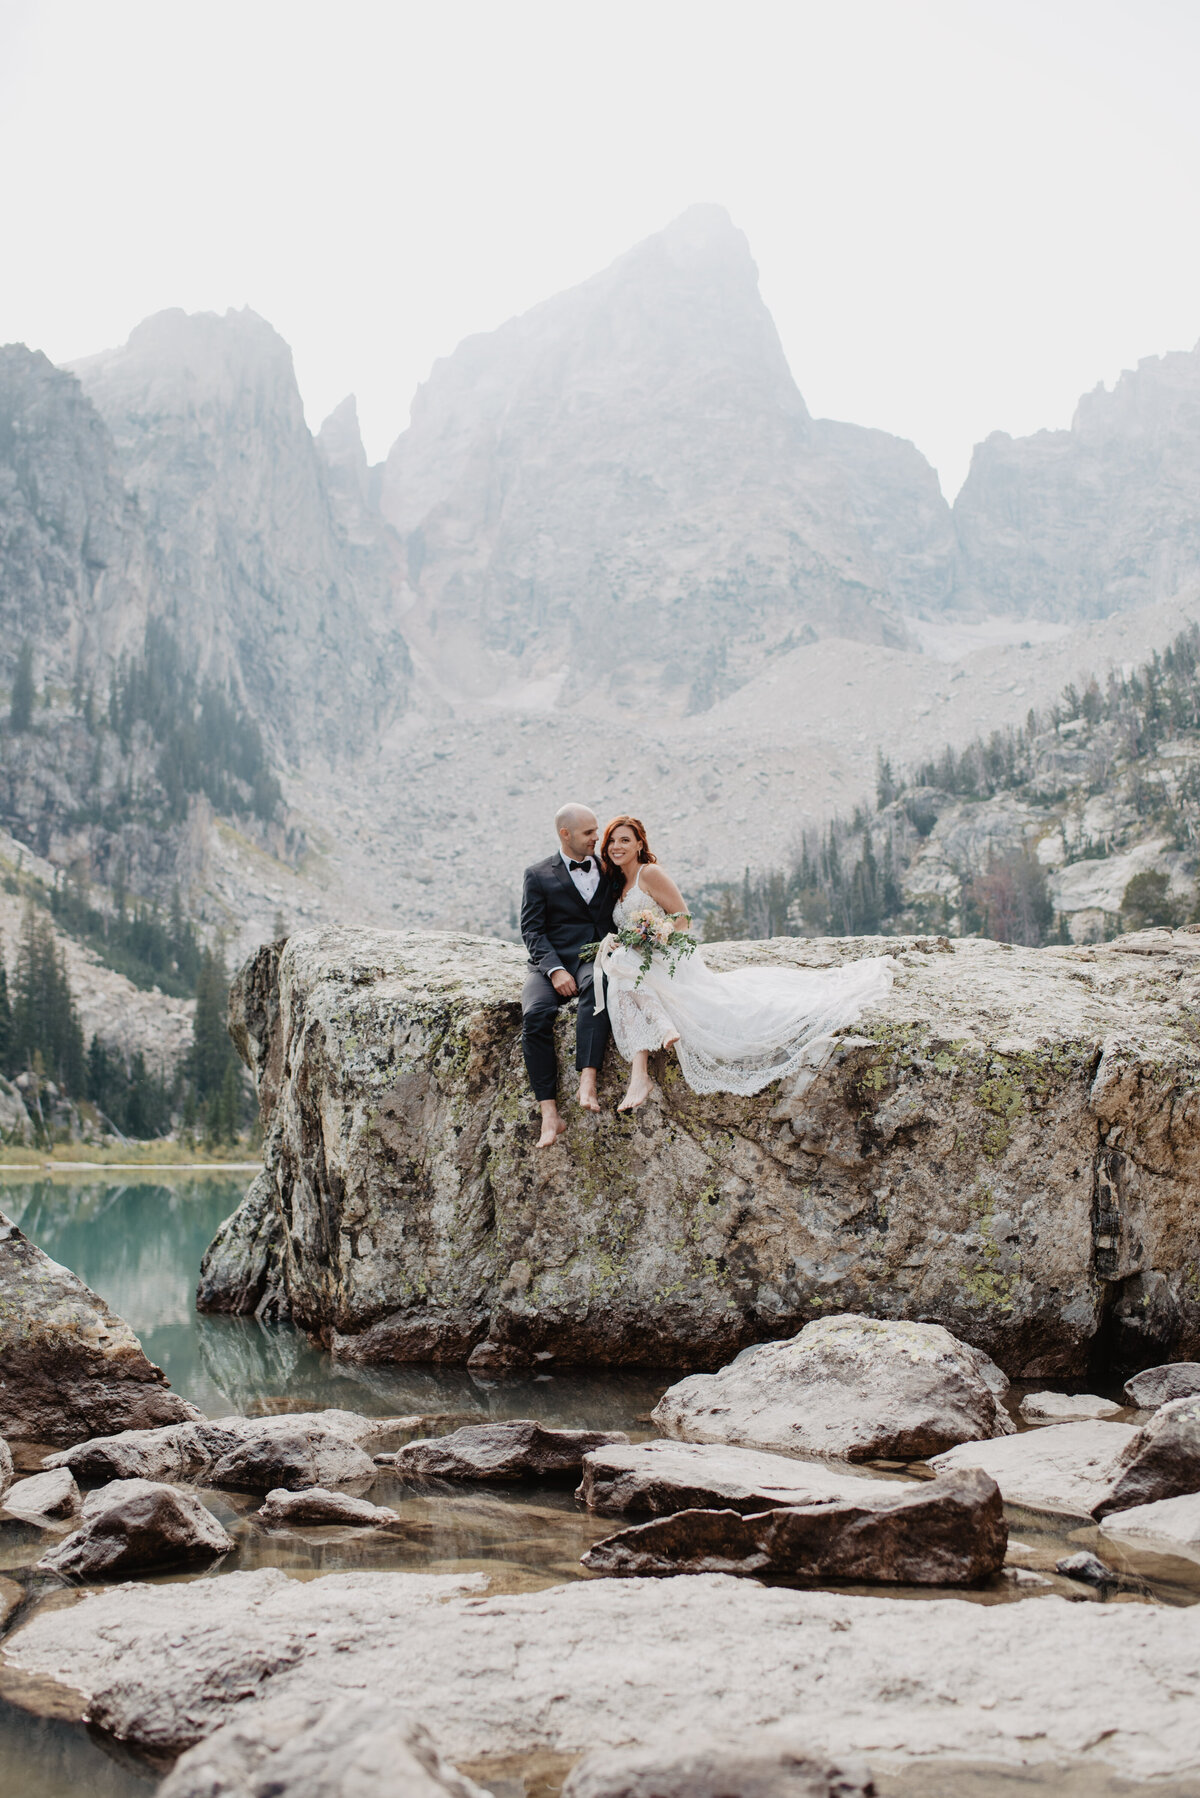 Jackson Hole Photographers capture bride and groom sitting together on rock